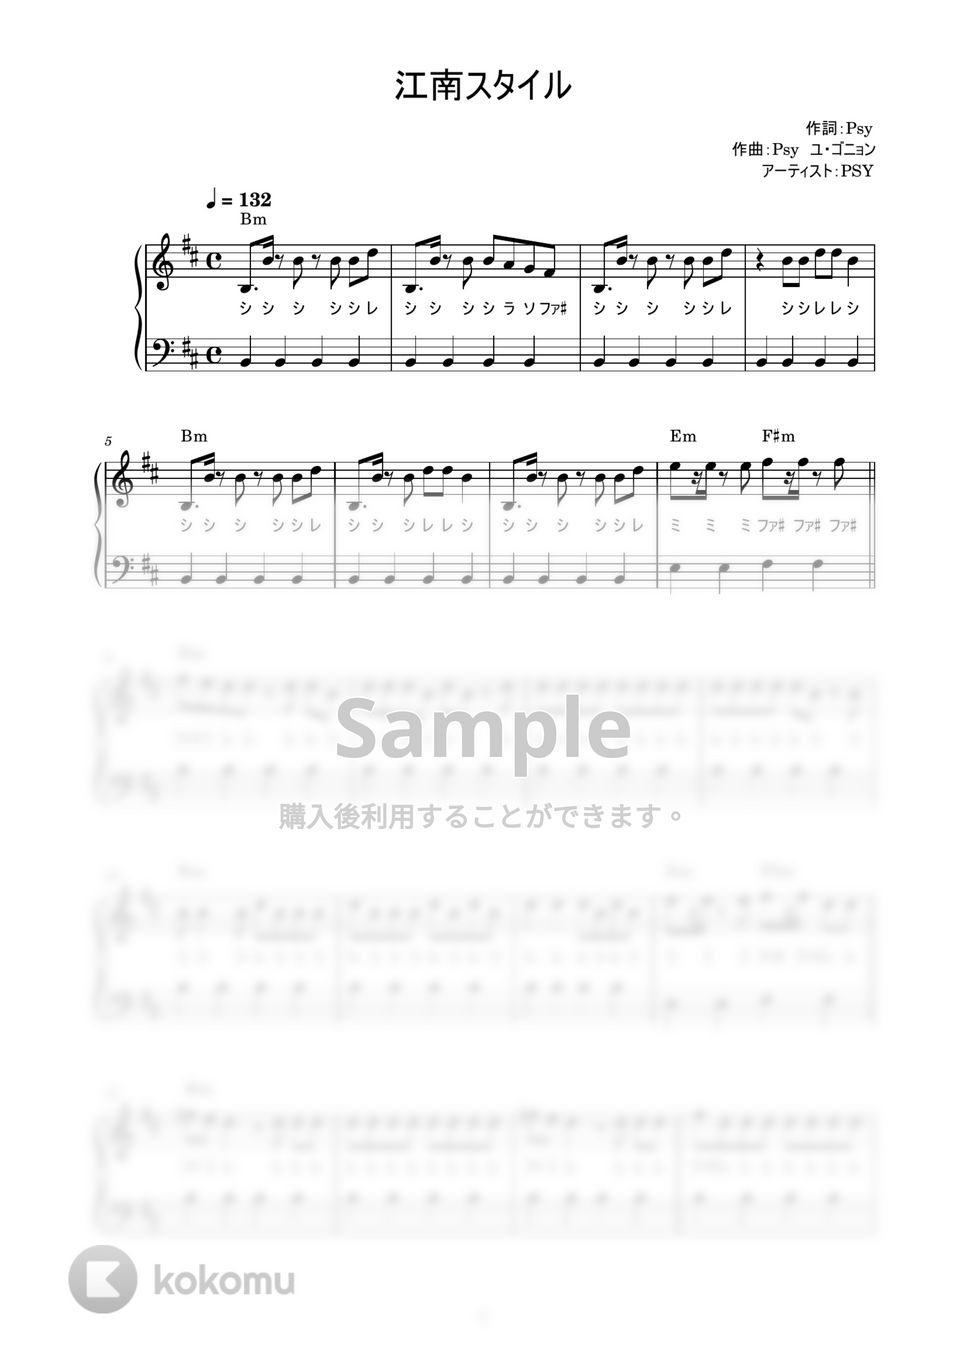 PSY - 江南スタイル (かんたん / 歌詞付き / ドレミ付き / 初心者) by piano.tokyo